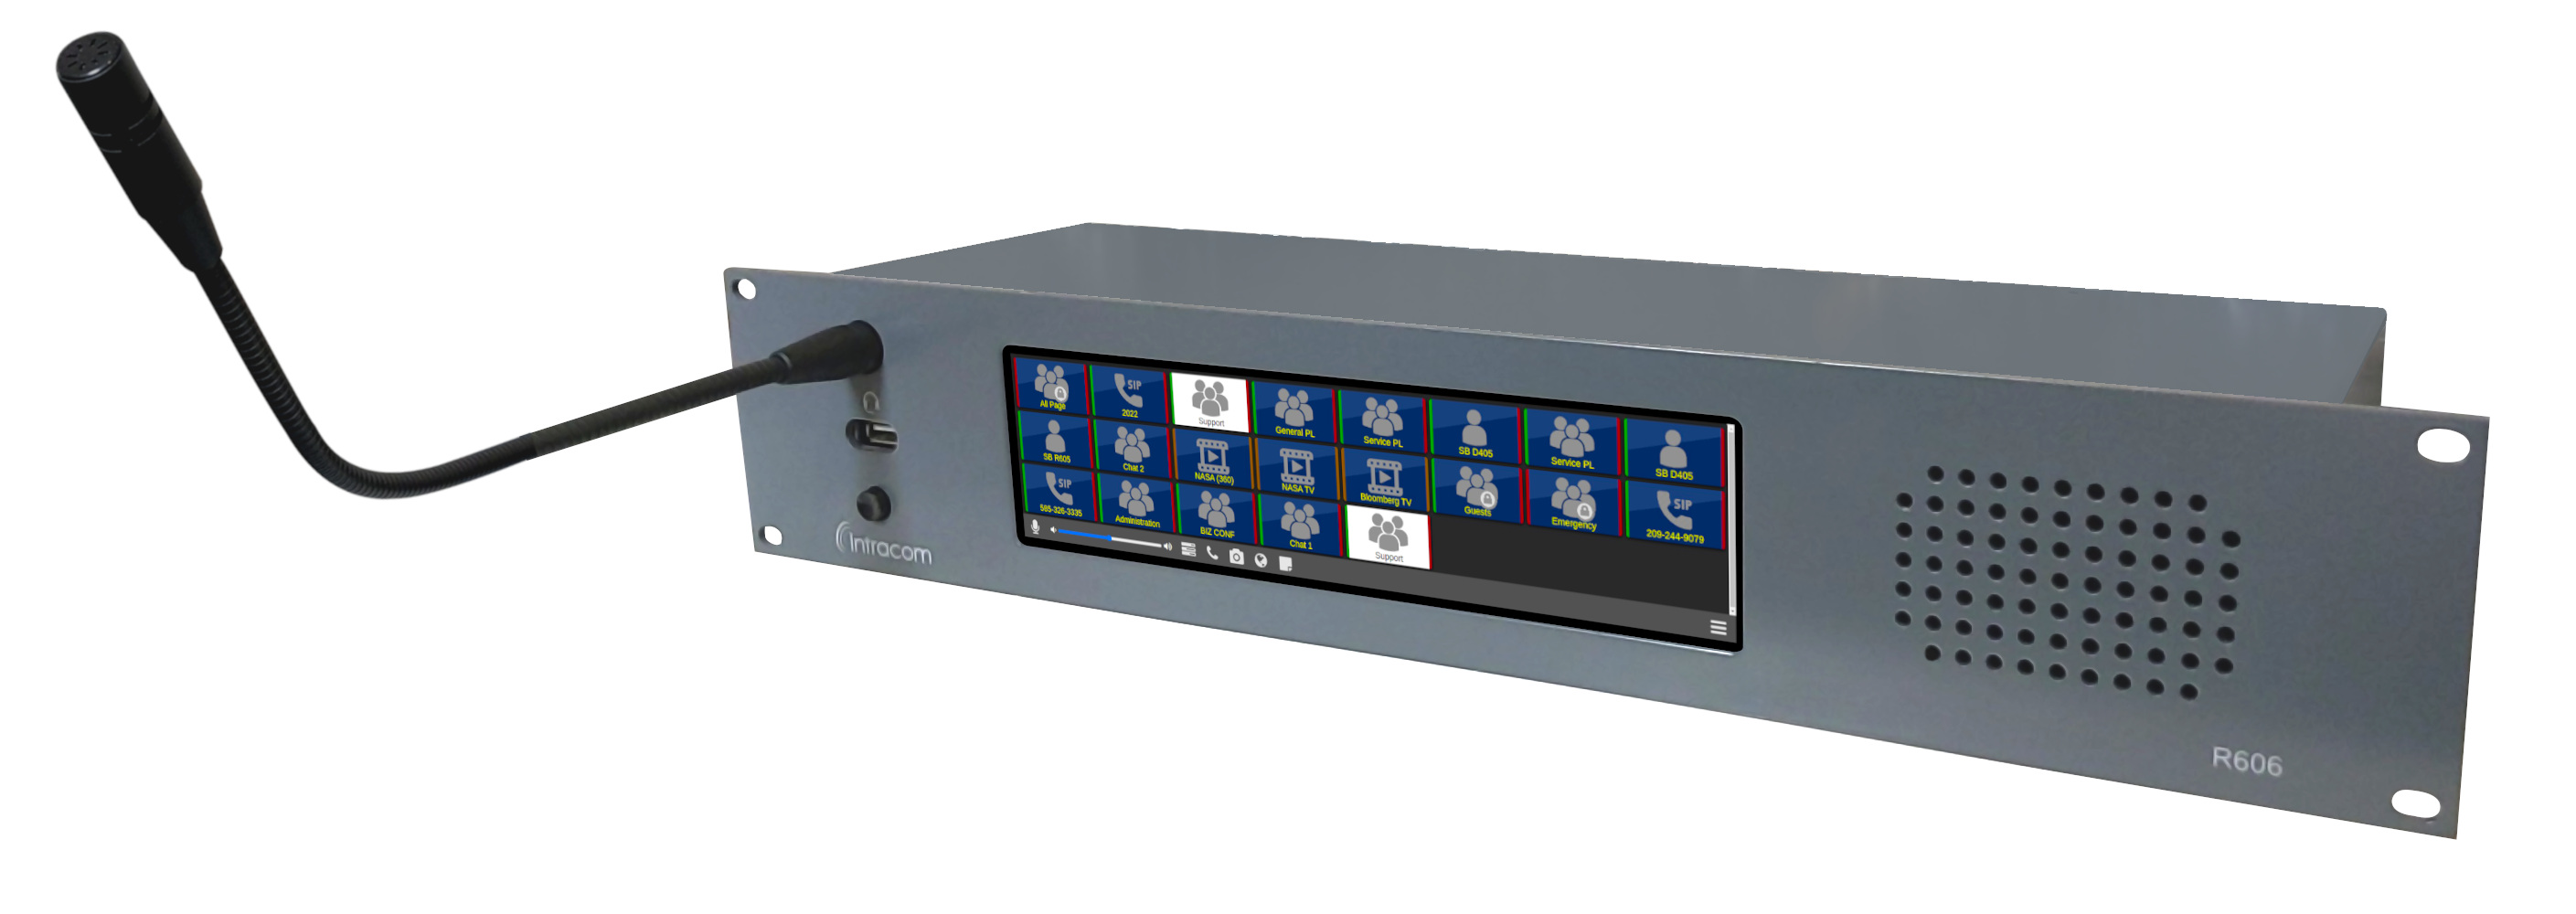 VCOM Desktop Control Panel hardware rackmount with touch panel, gooseneck microphone and speaker